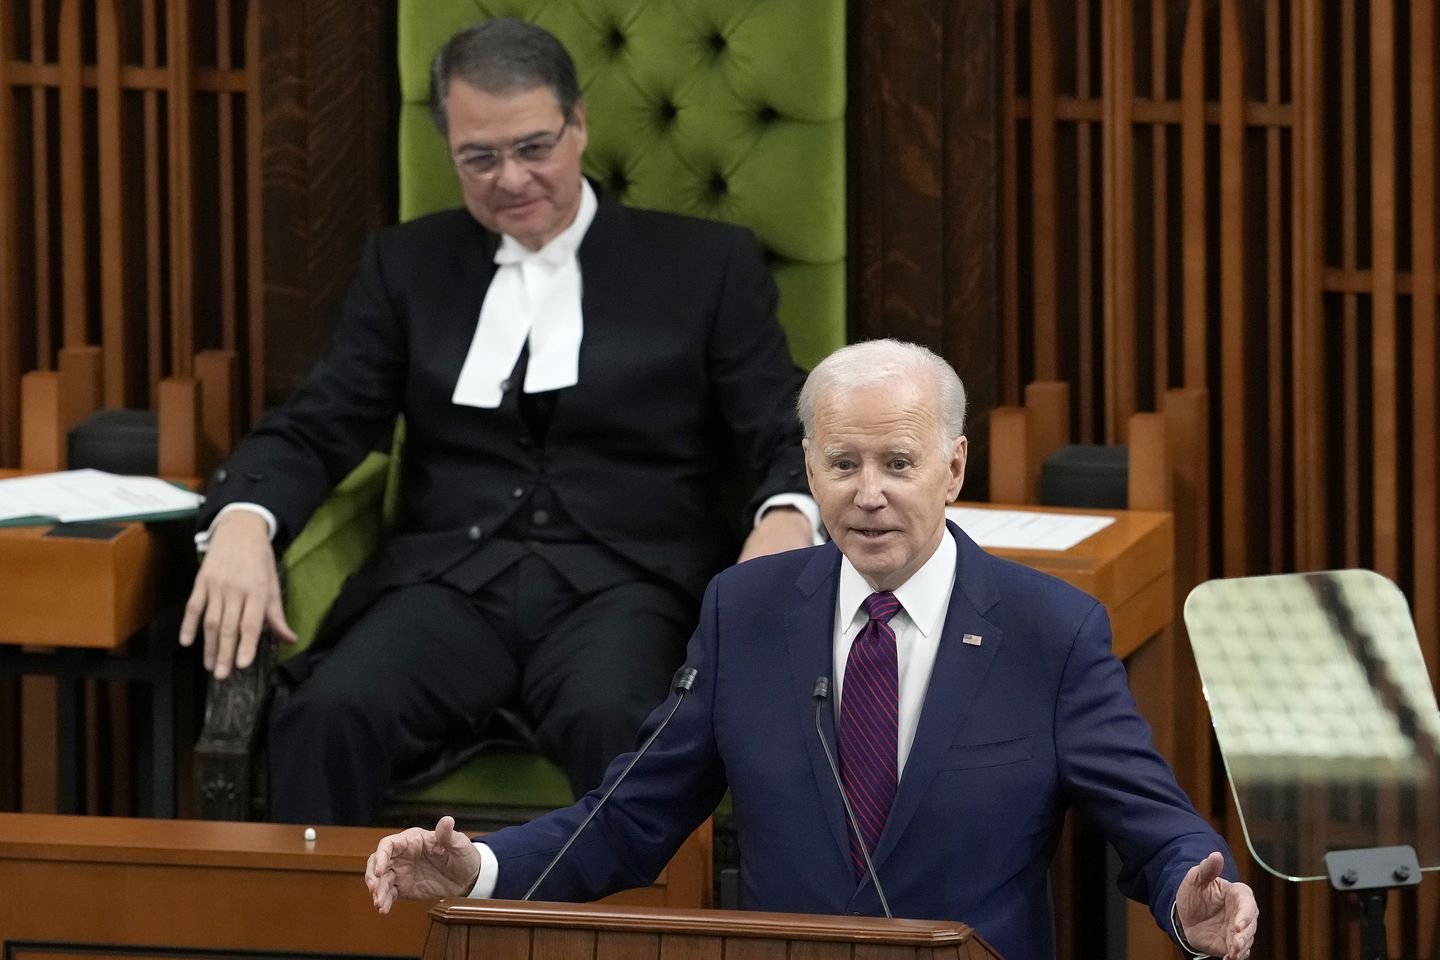 Biden underscores unity in address to Canadian Parliament